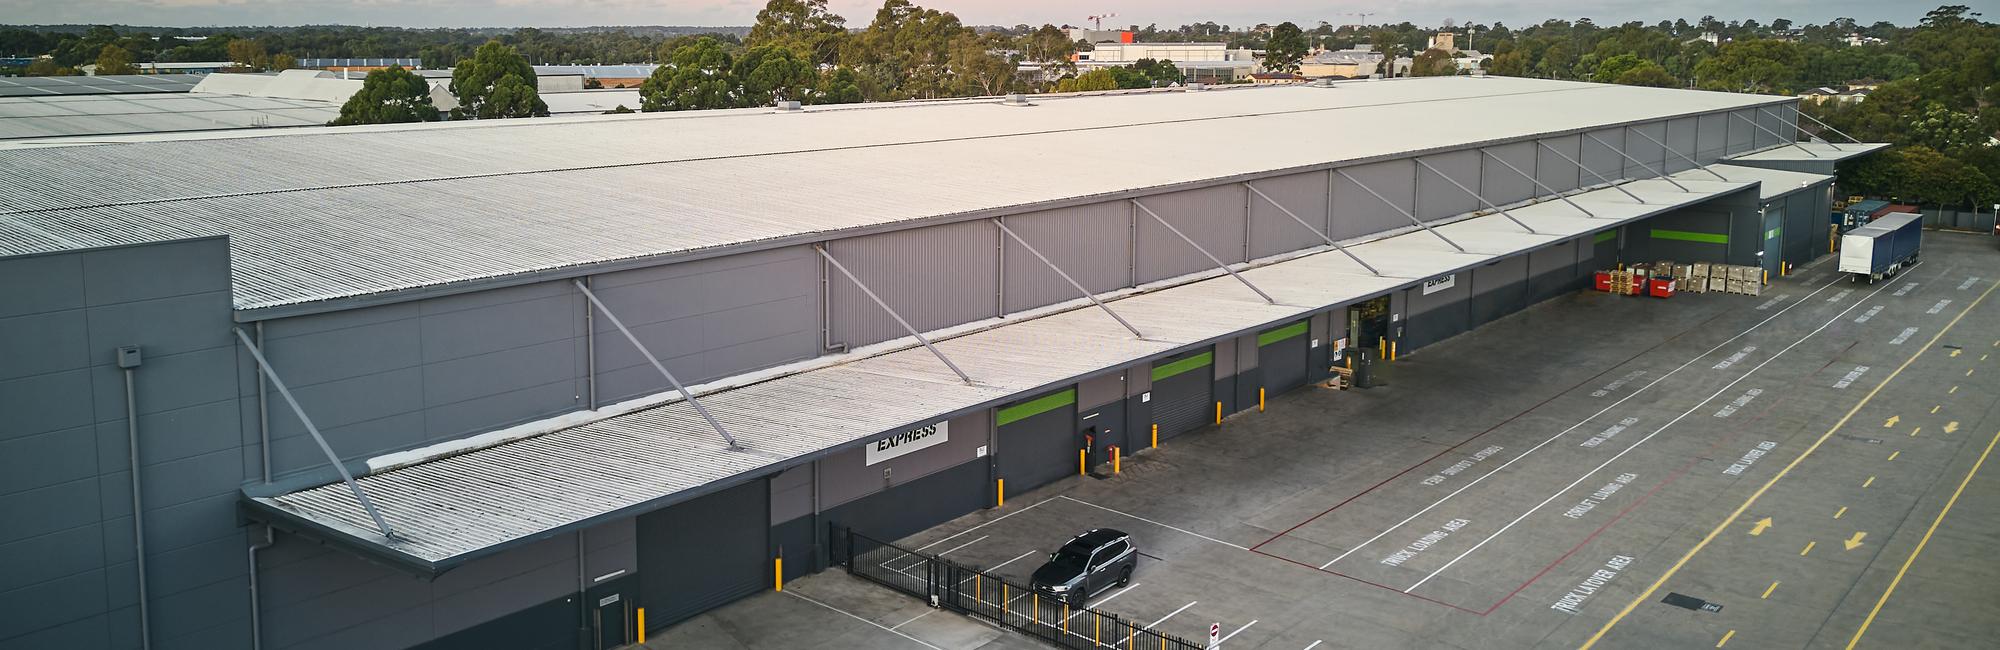 MFive Industry Park warehouse - external